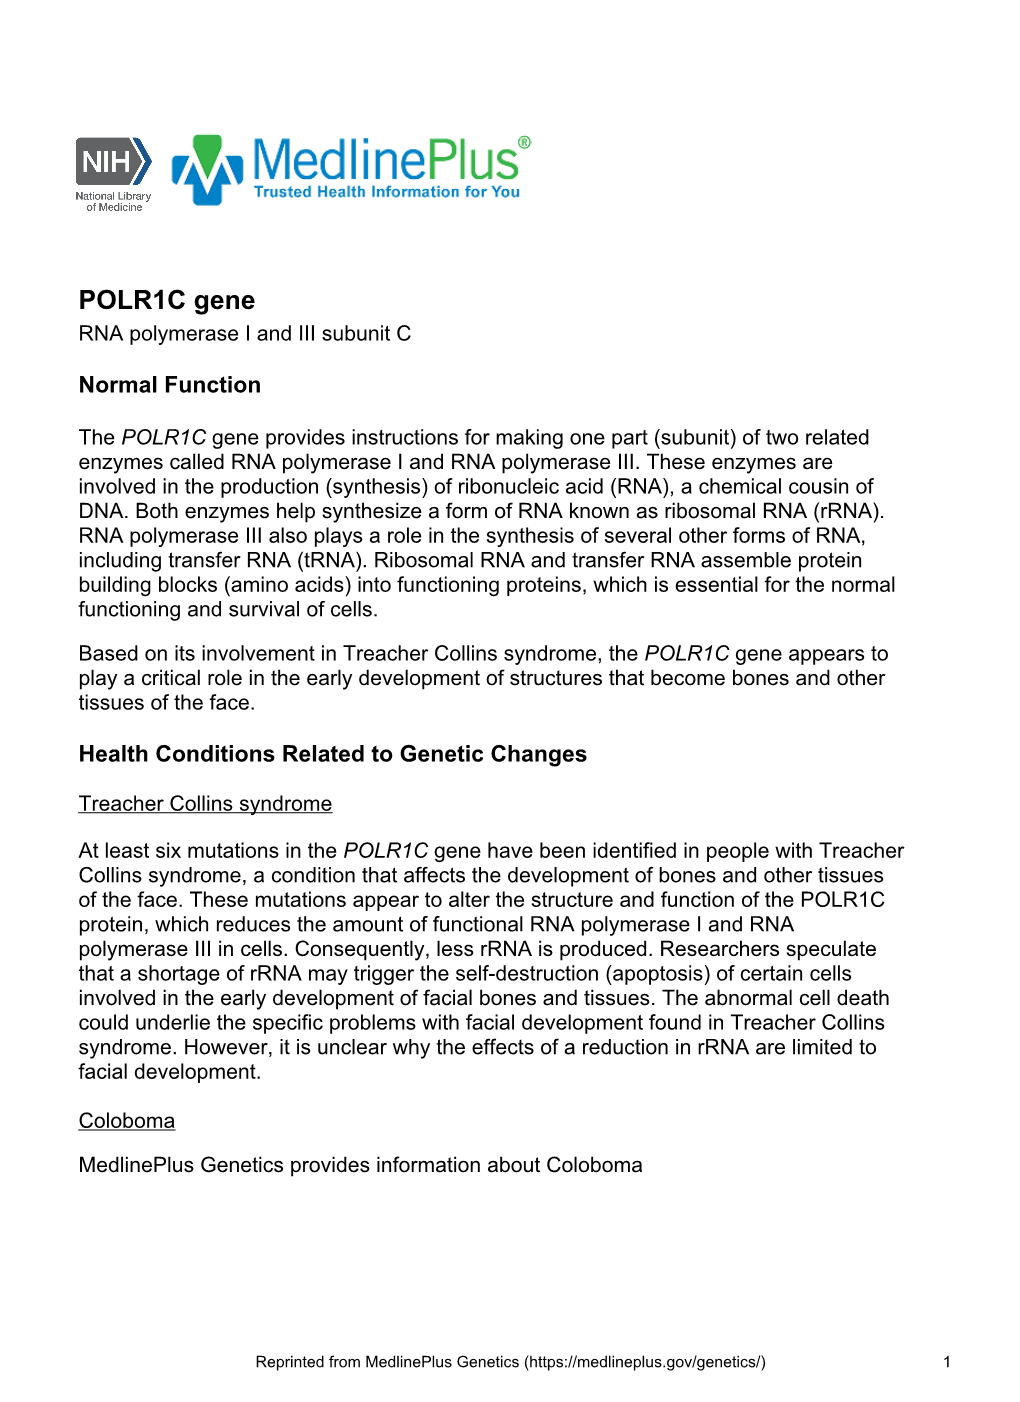 POLR1C Gene RNA Polymerase I and III Subunit C